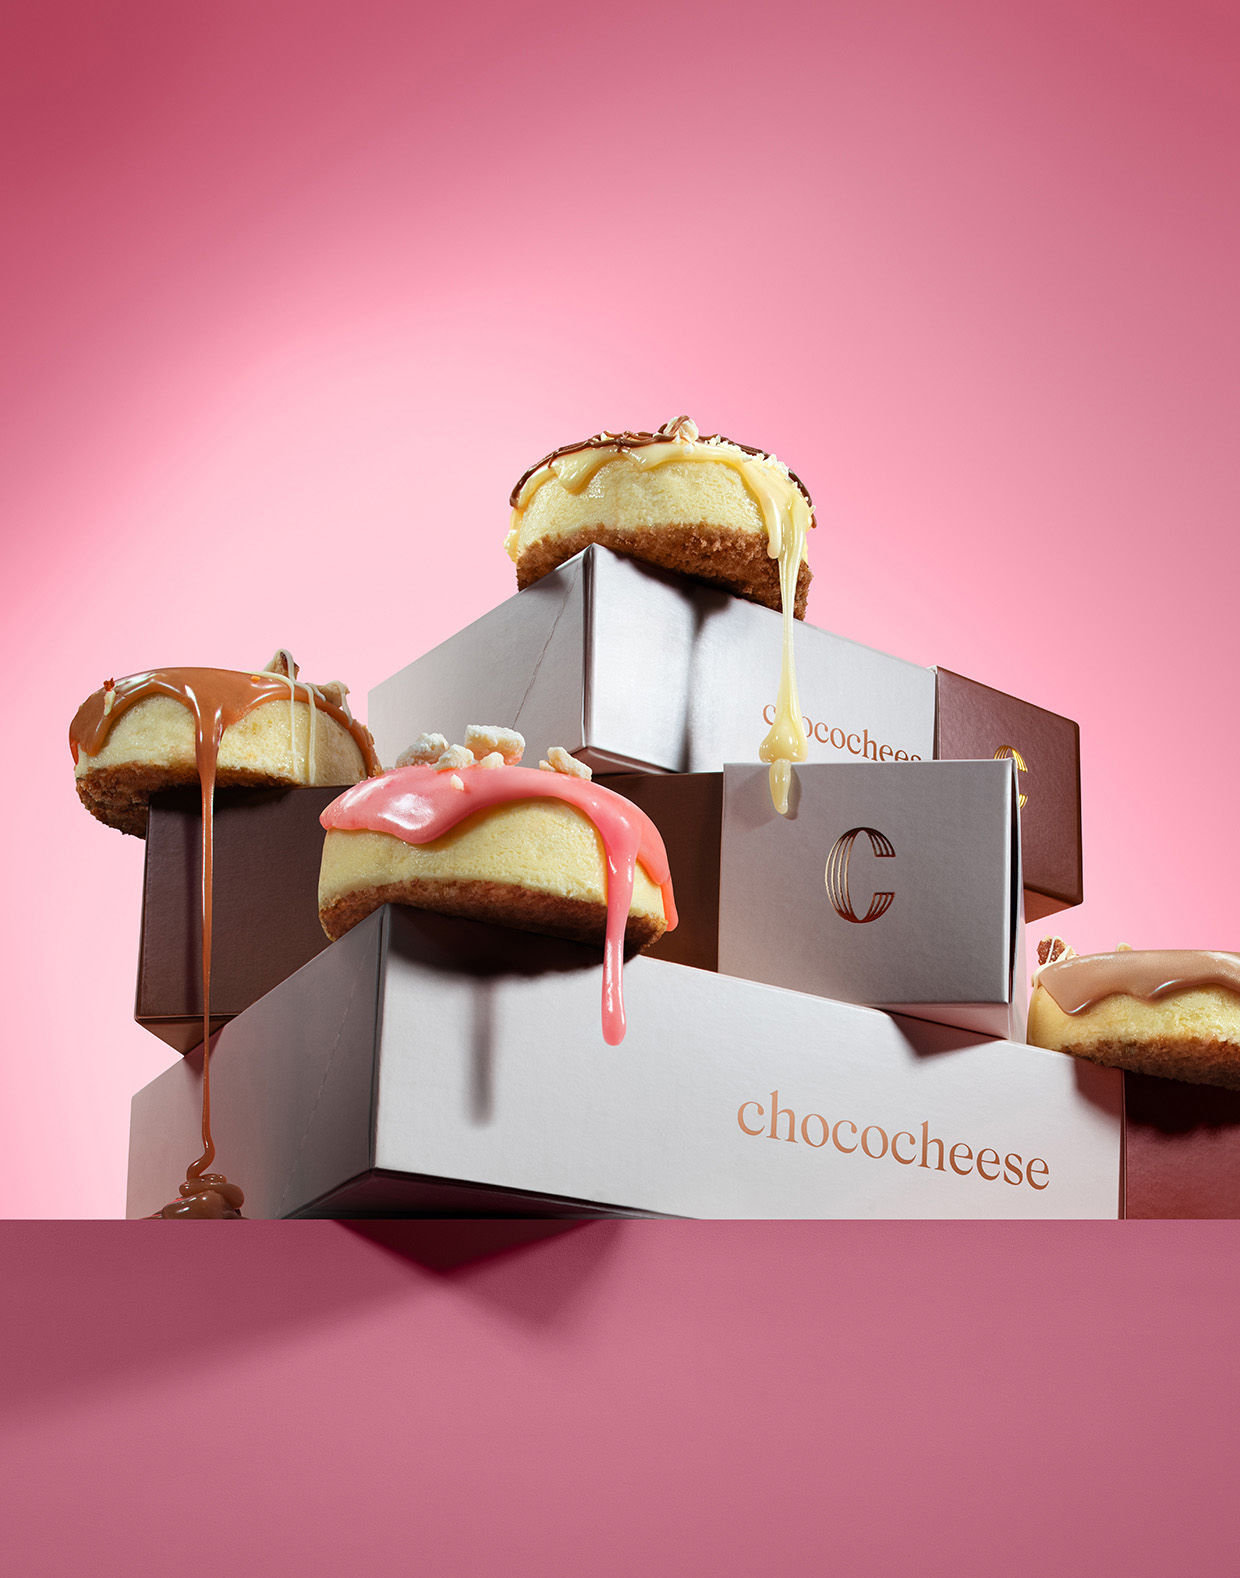 New-york-fodd-studio-chcocheese-donuts-stack-Ad